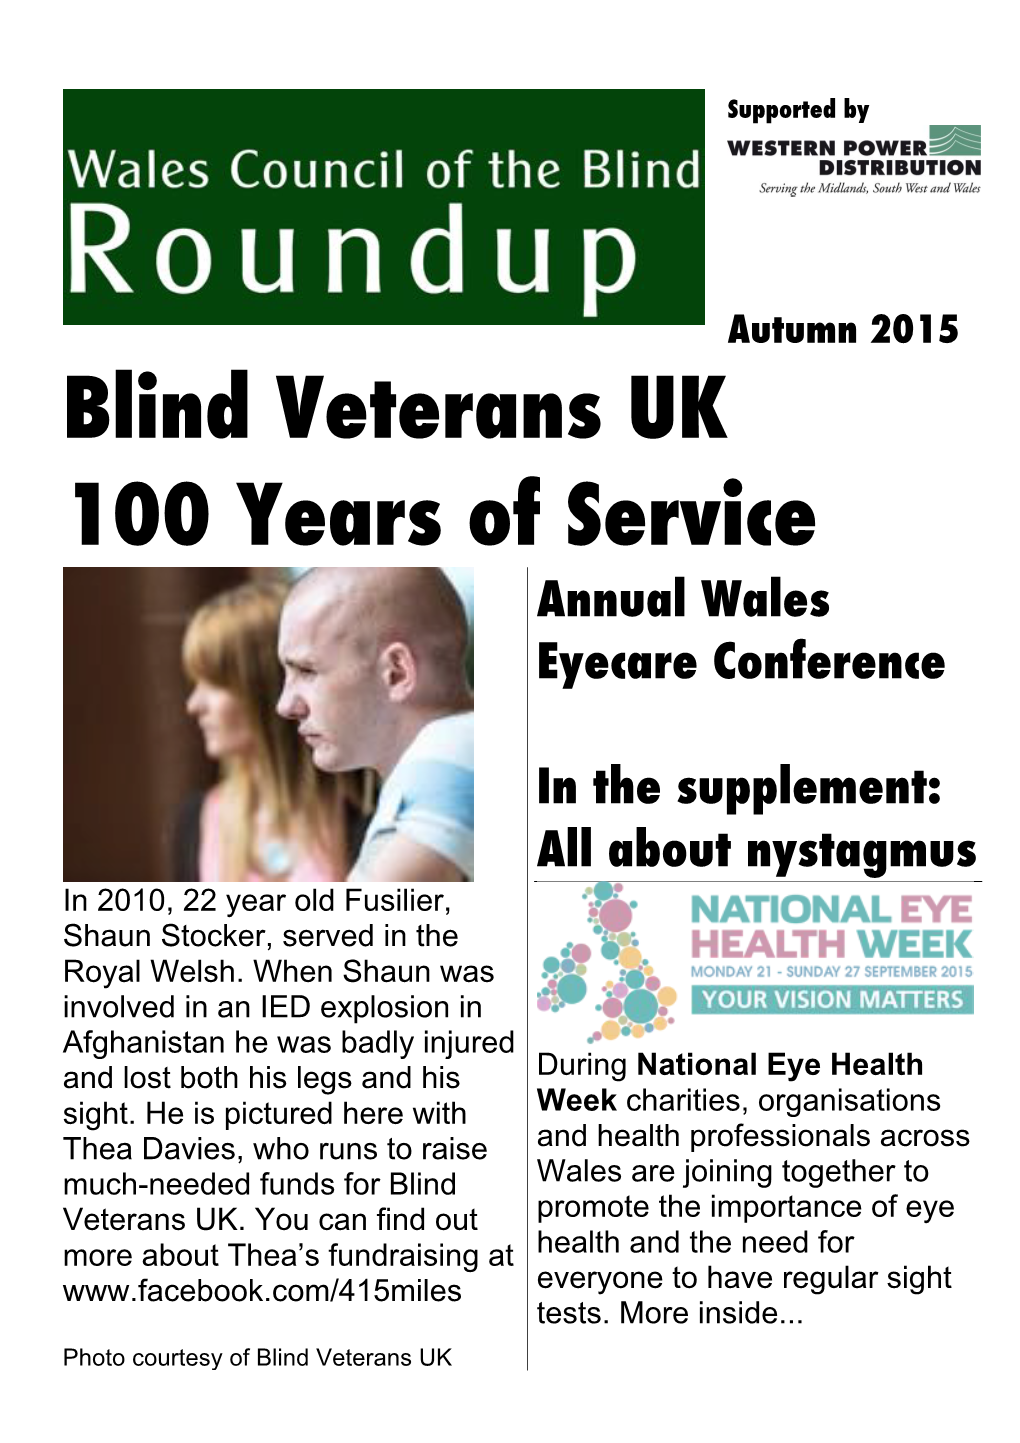 Blind Veterans UK 100 Years of Service